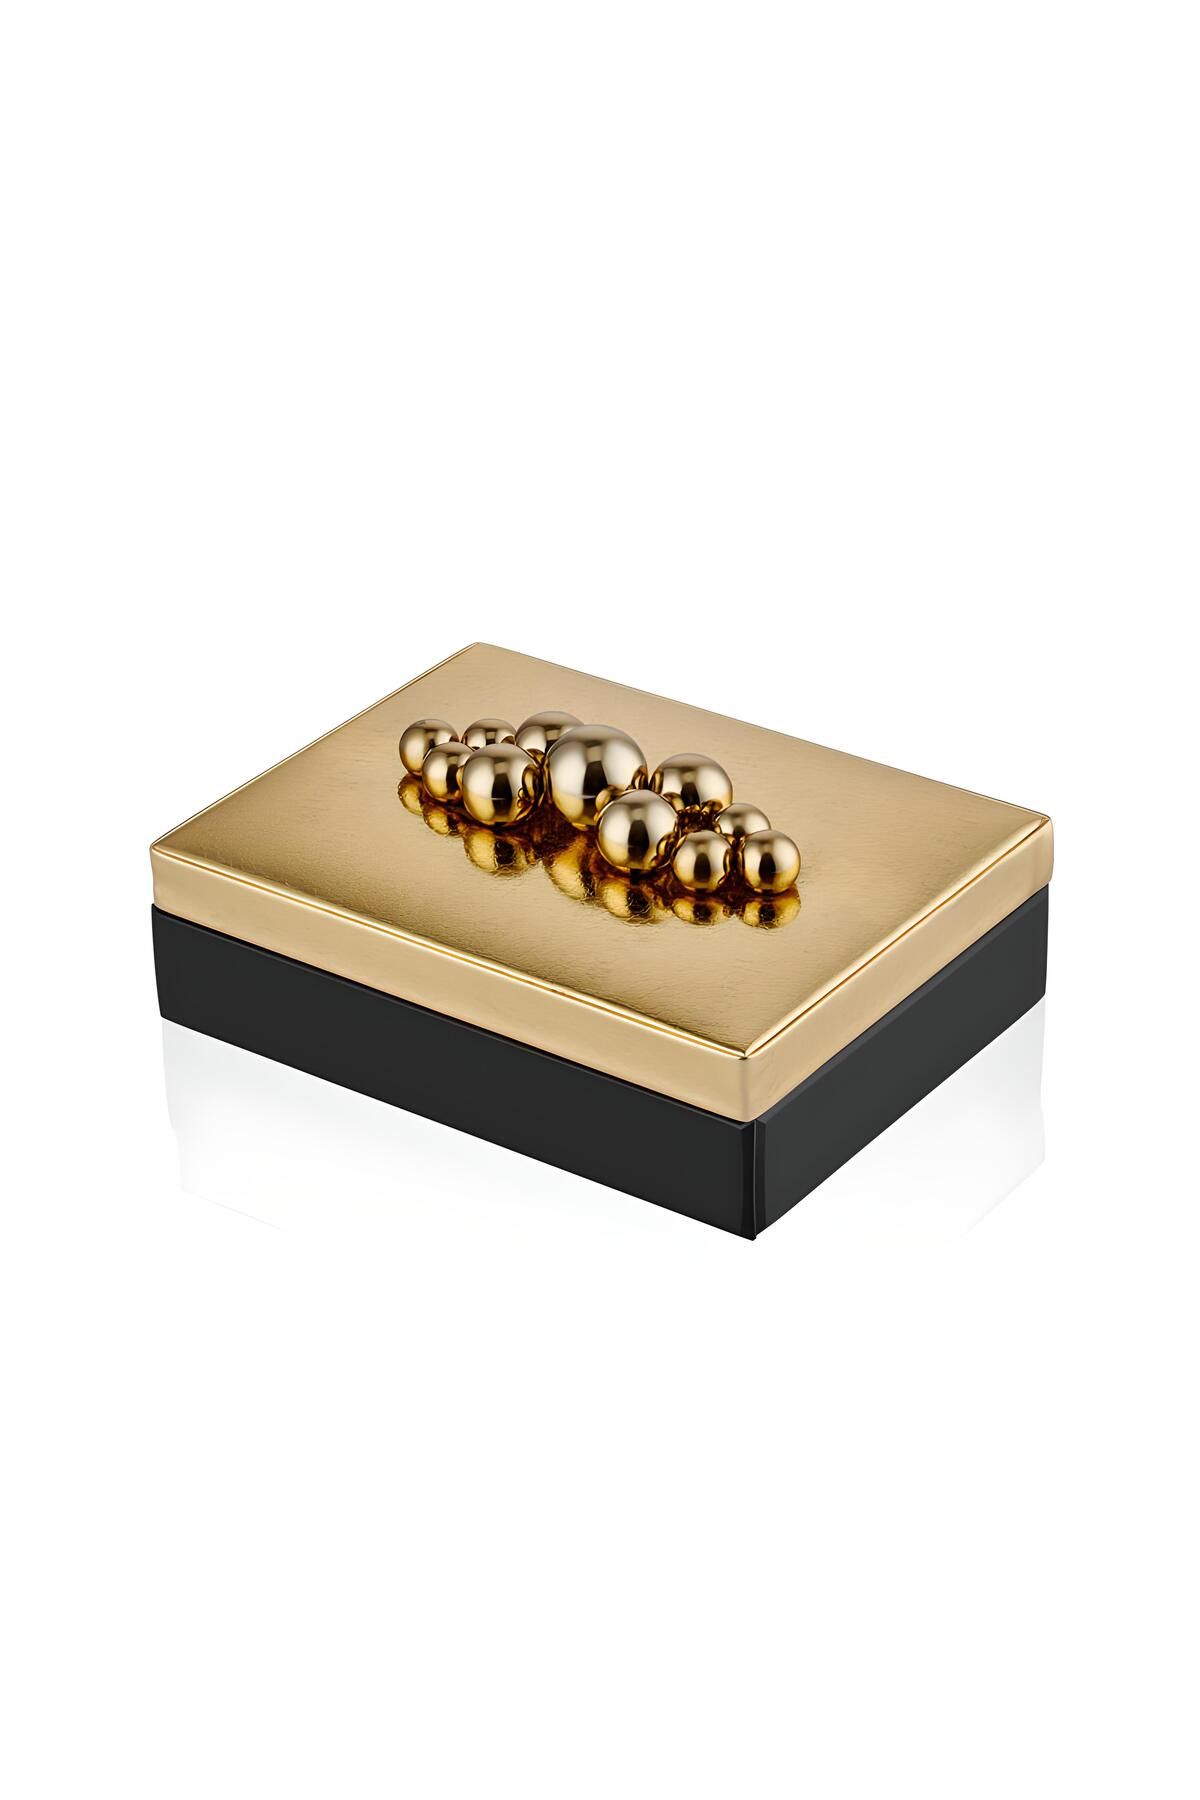 LAMEDORE ROLLING STONE BLACK GOLD SMALL RECTANGULAR BOX